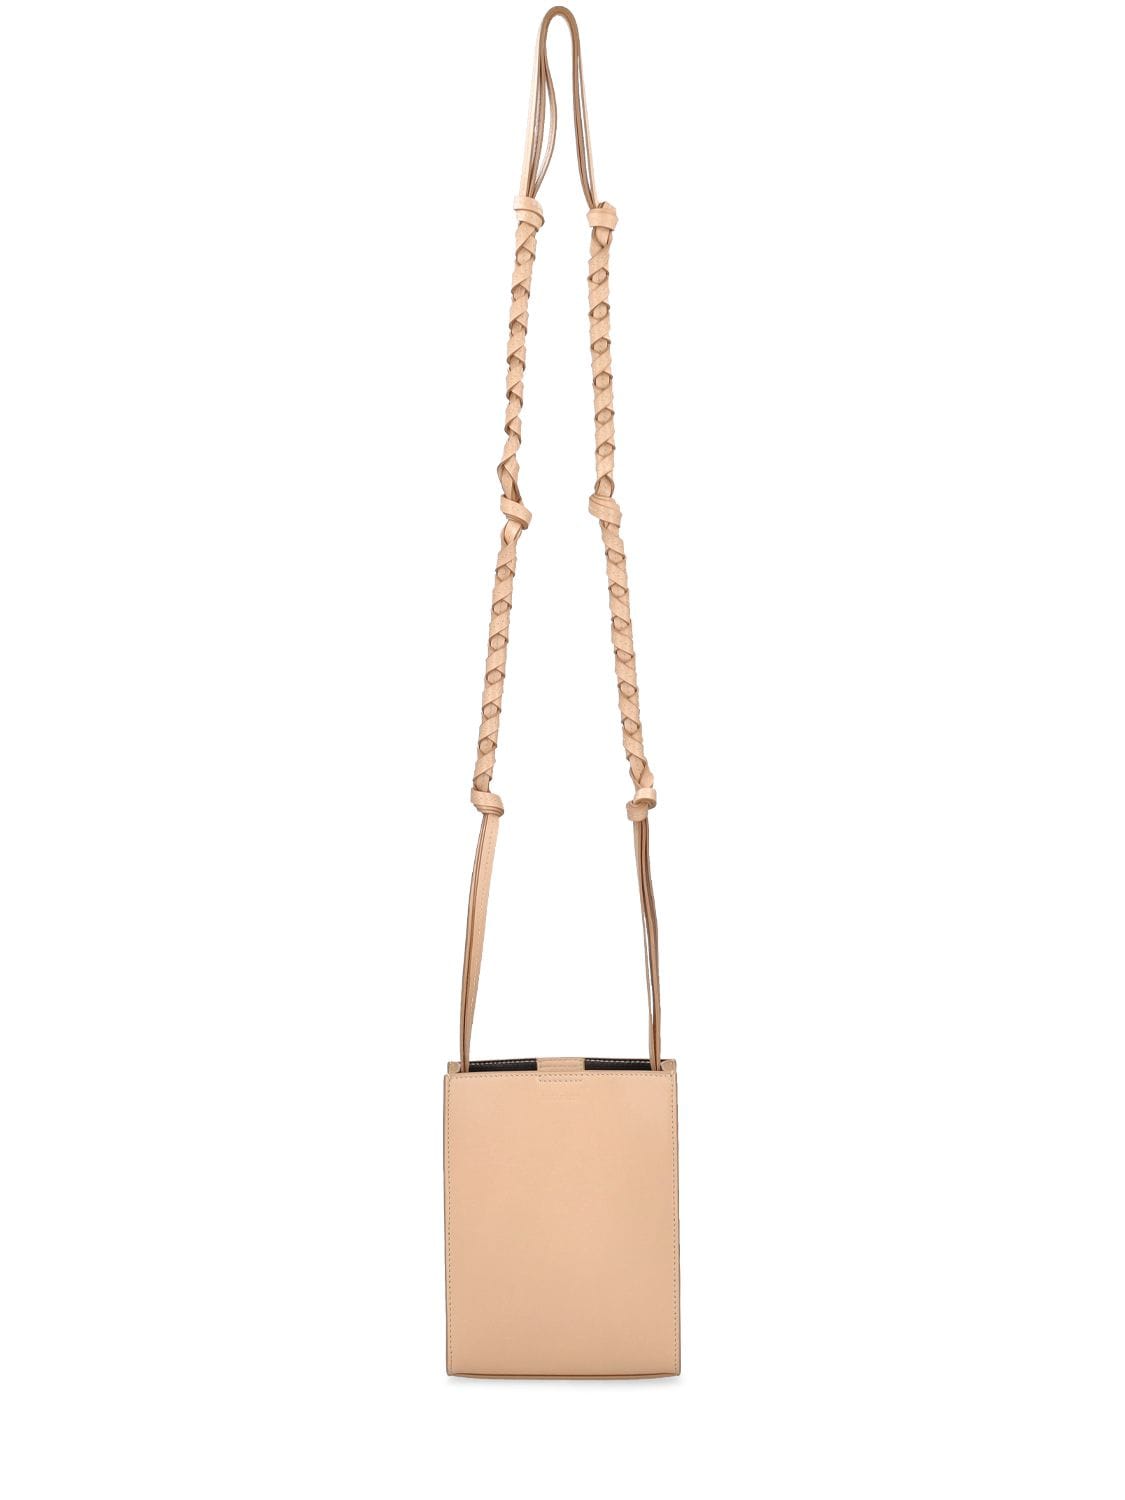 Image of Small Tangle Leather Bag